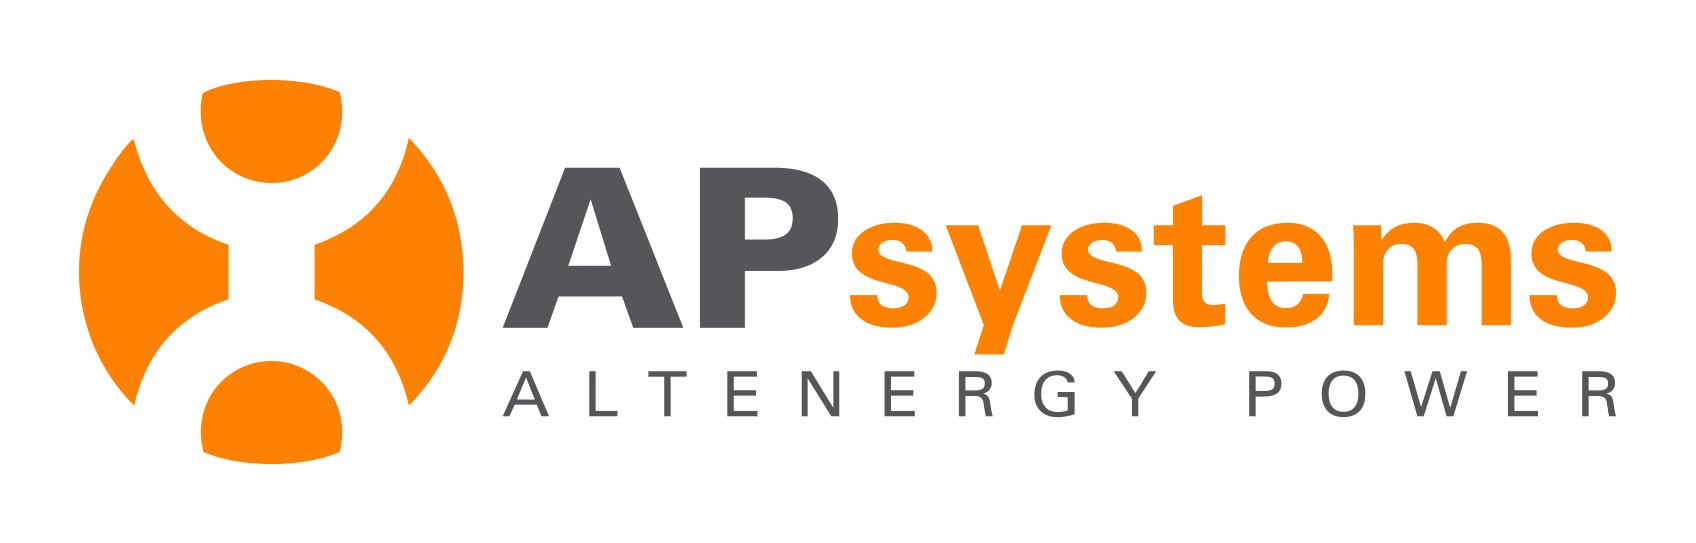 APSystems Logo